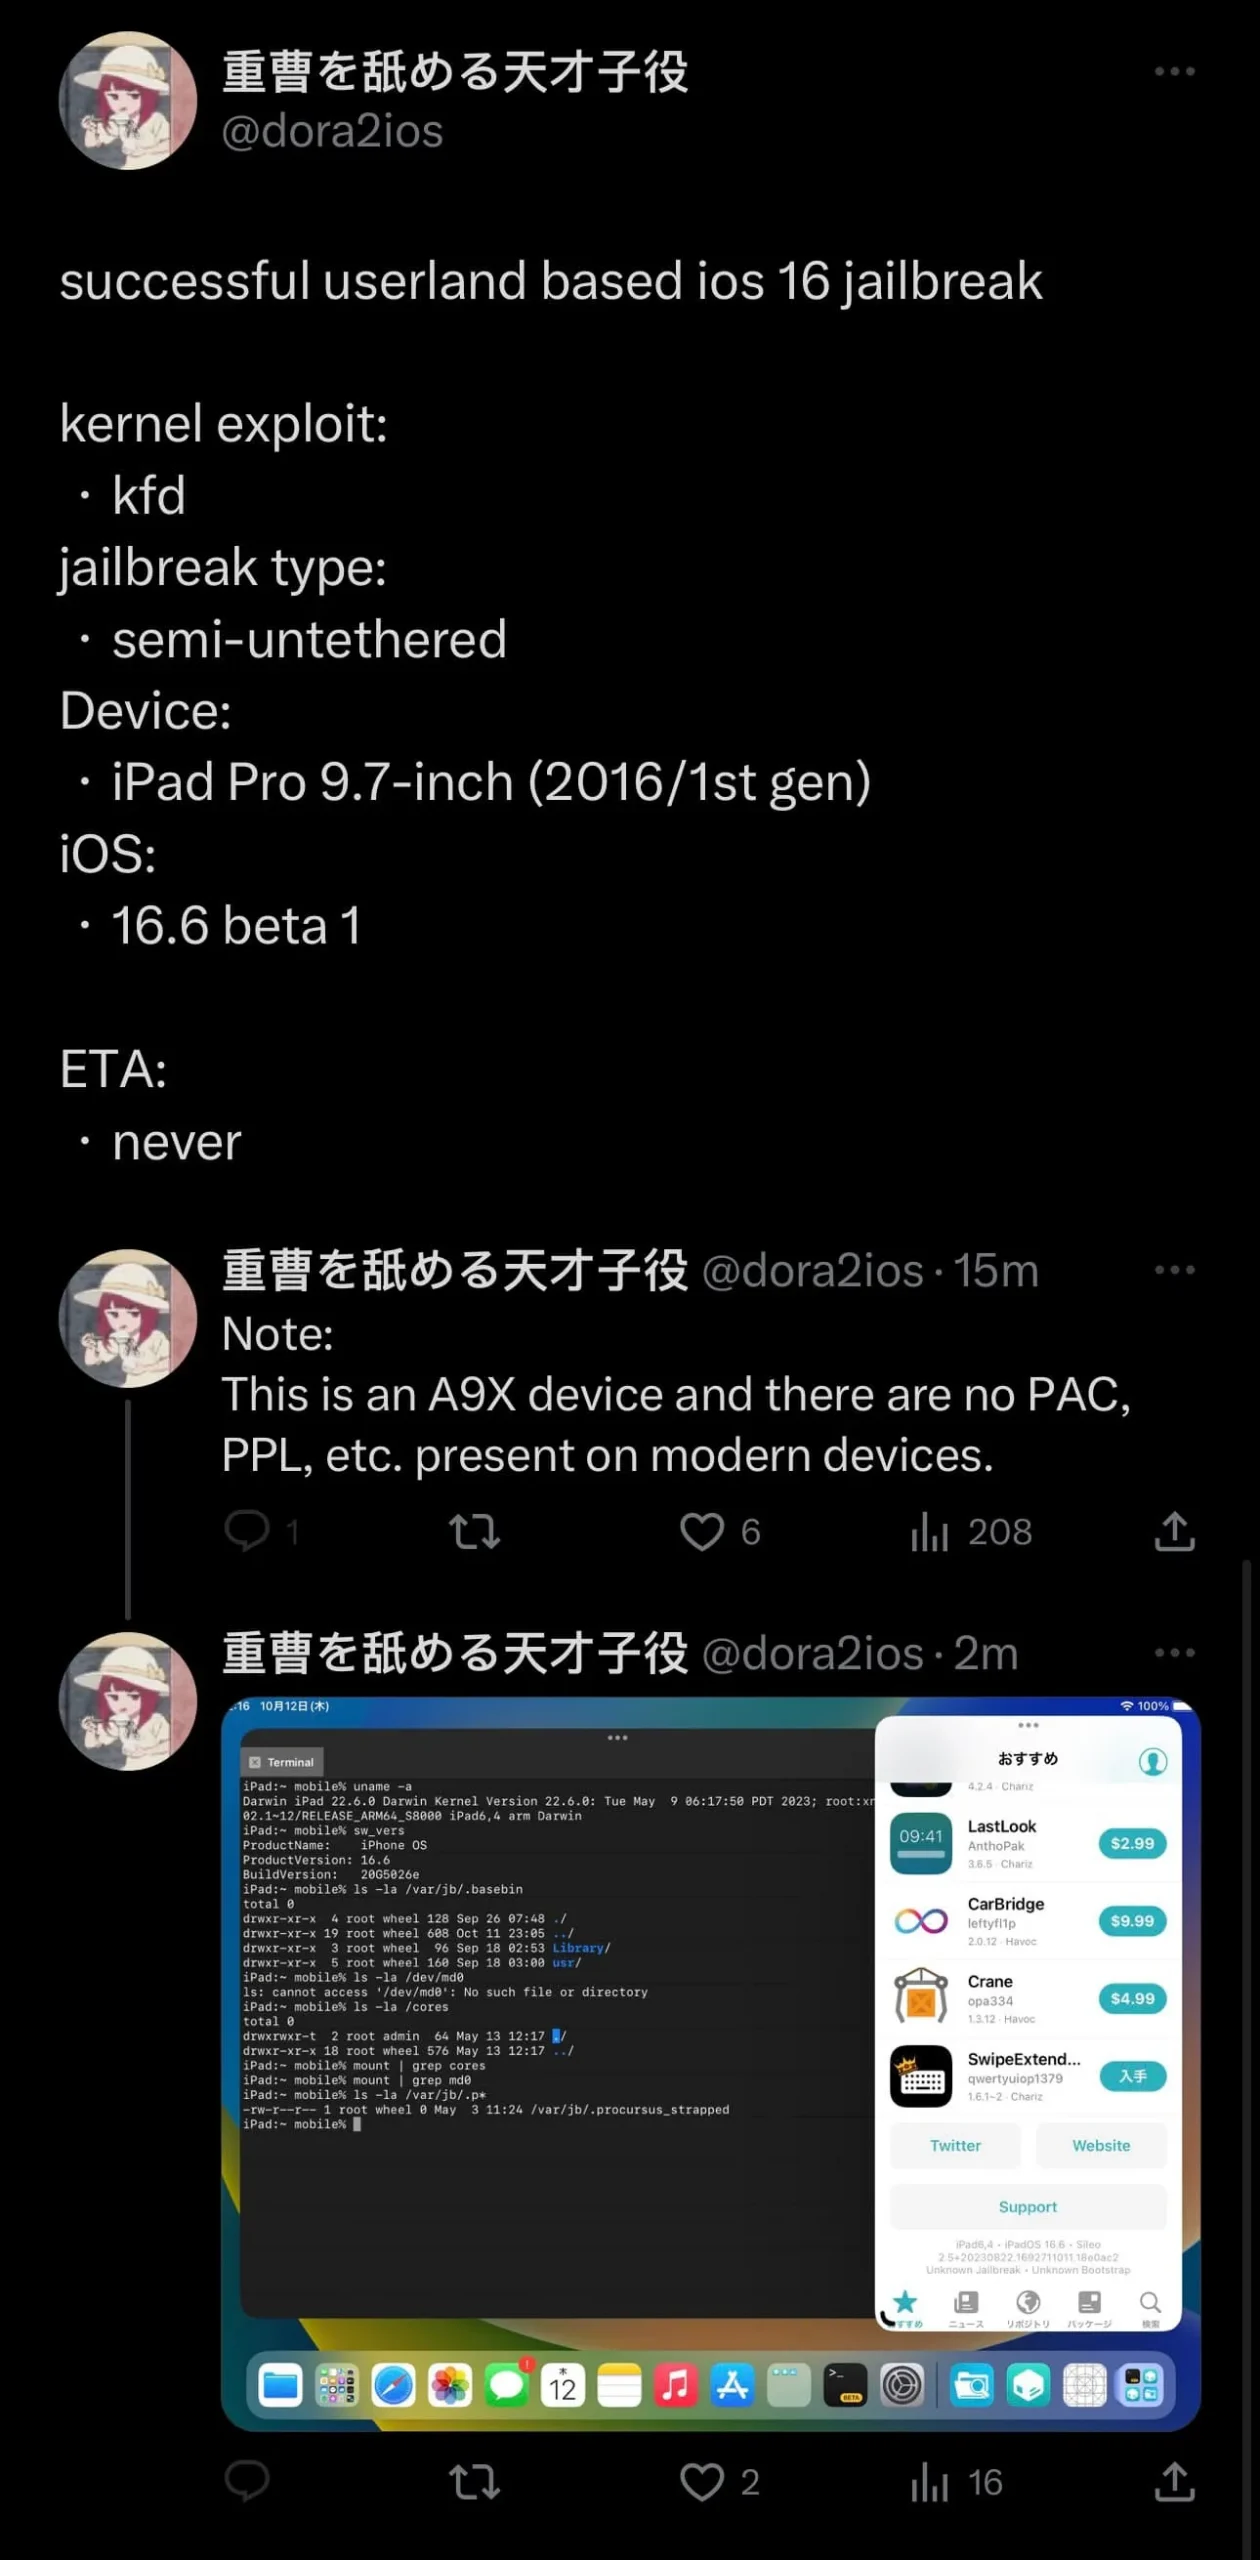 dora2ios 使用 kfd 漏洞測試 iPadOS 16.6 beta 1 越獄。